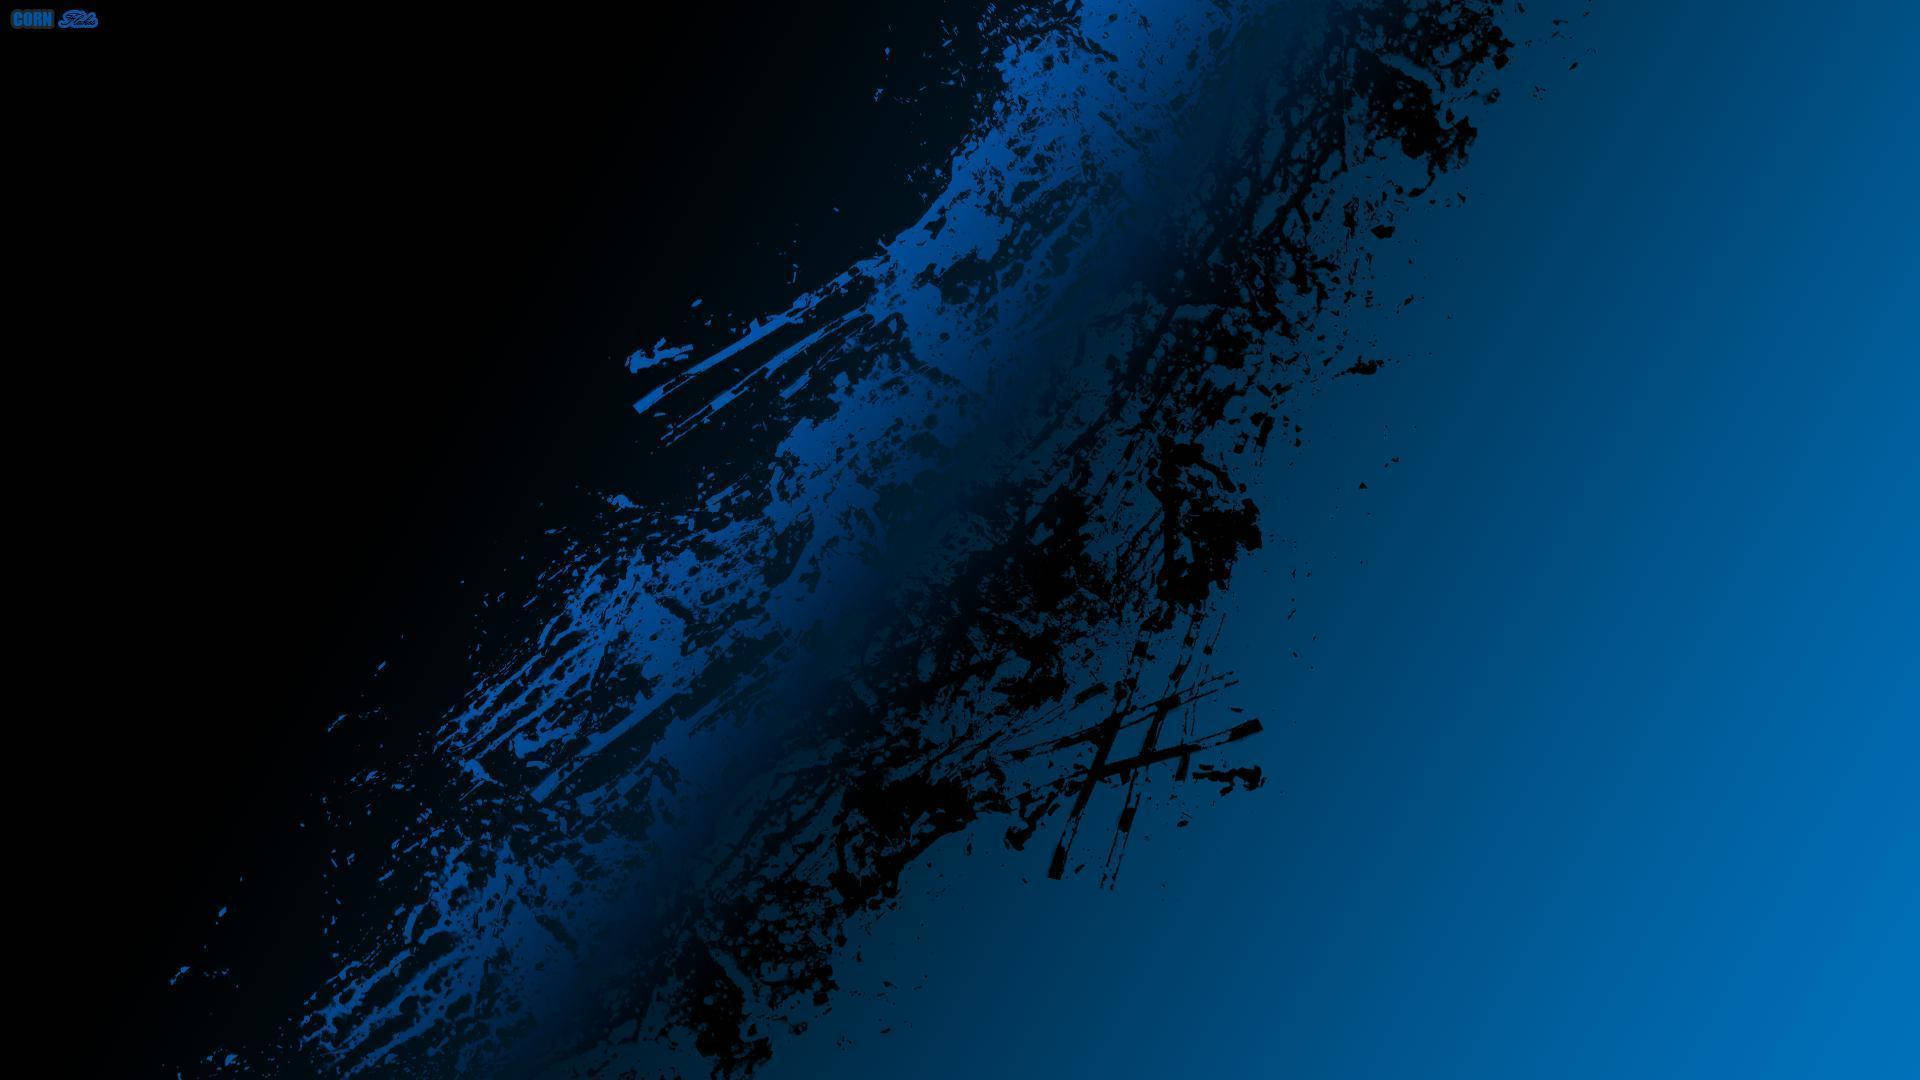 Free Black And Blue Wallpaper Downloads, [300+] Black And Blue Wallpapers  for FREE 